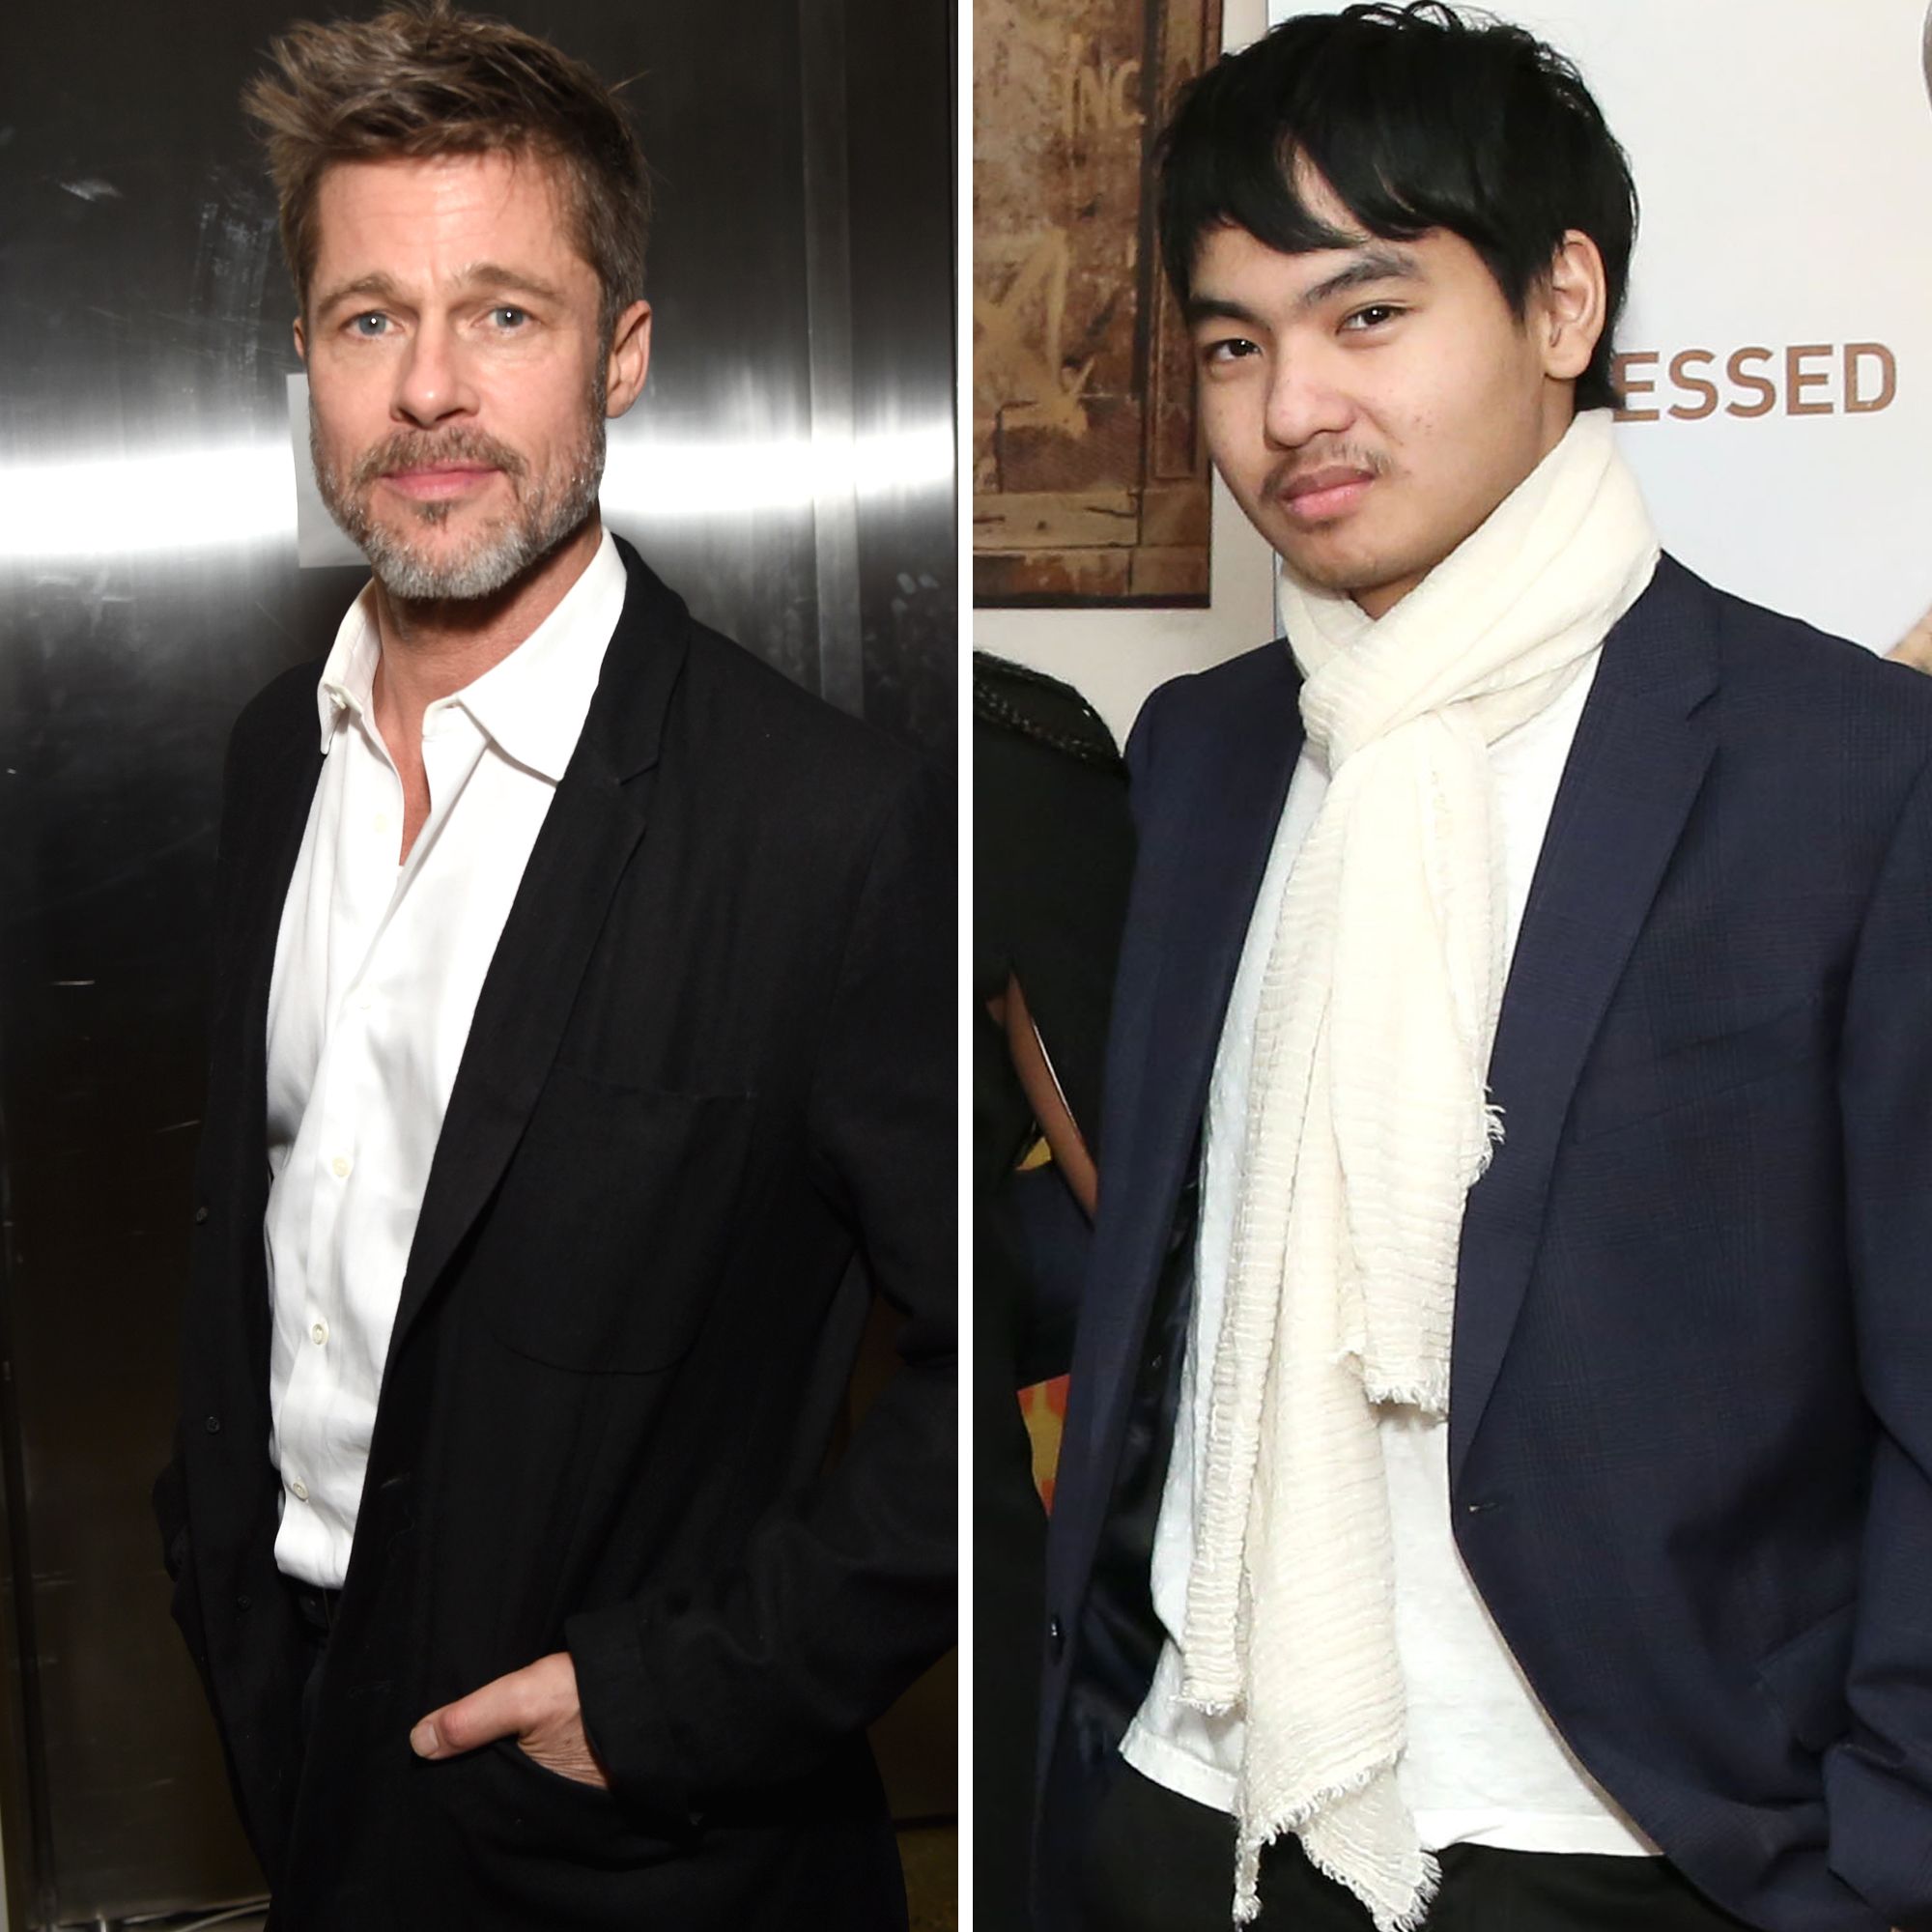 Maddox Jolie Pitt Responds To Strained Relationship With Dad Brad Pitt